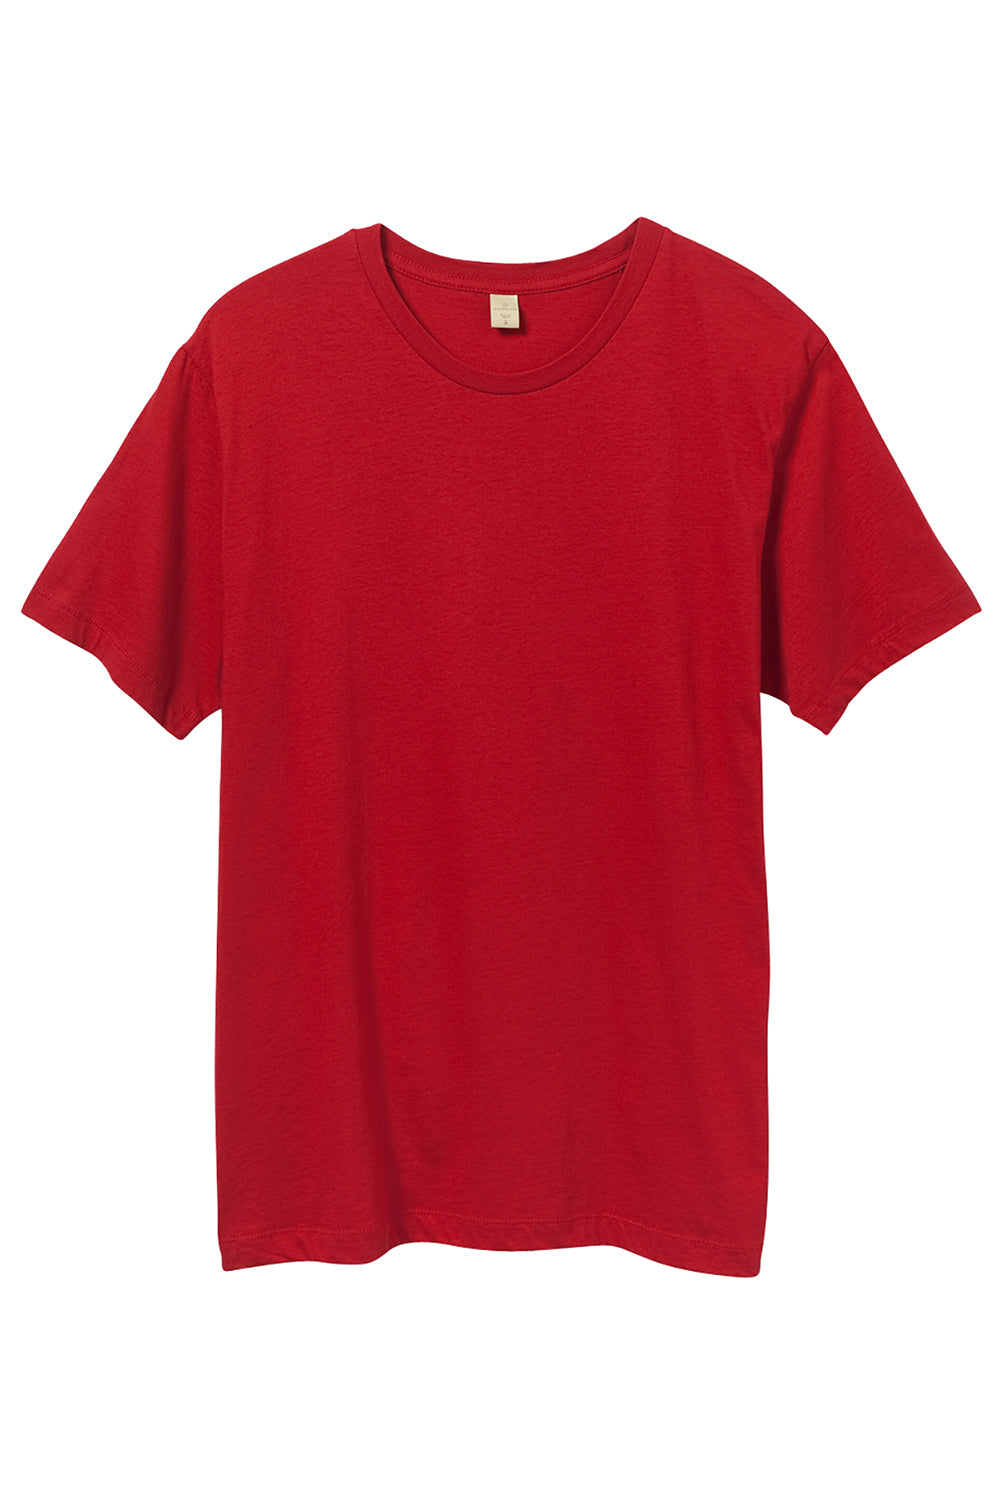 Alternative AA1070/1070 Mens Go To Jersey Short Sleeve Crewneck T-Shirt Apple Red Flat Front